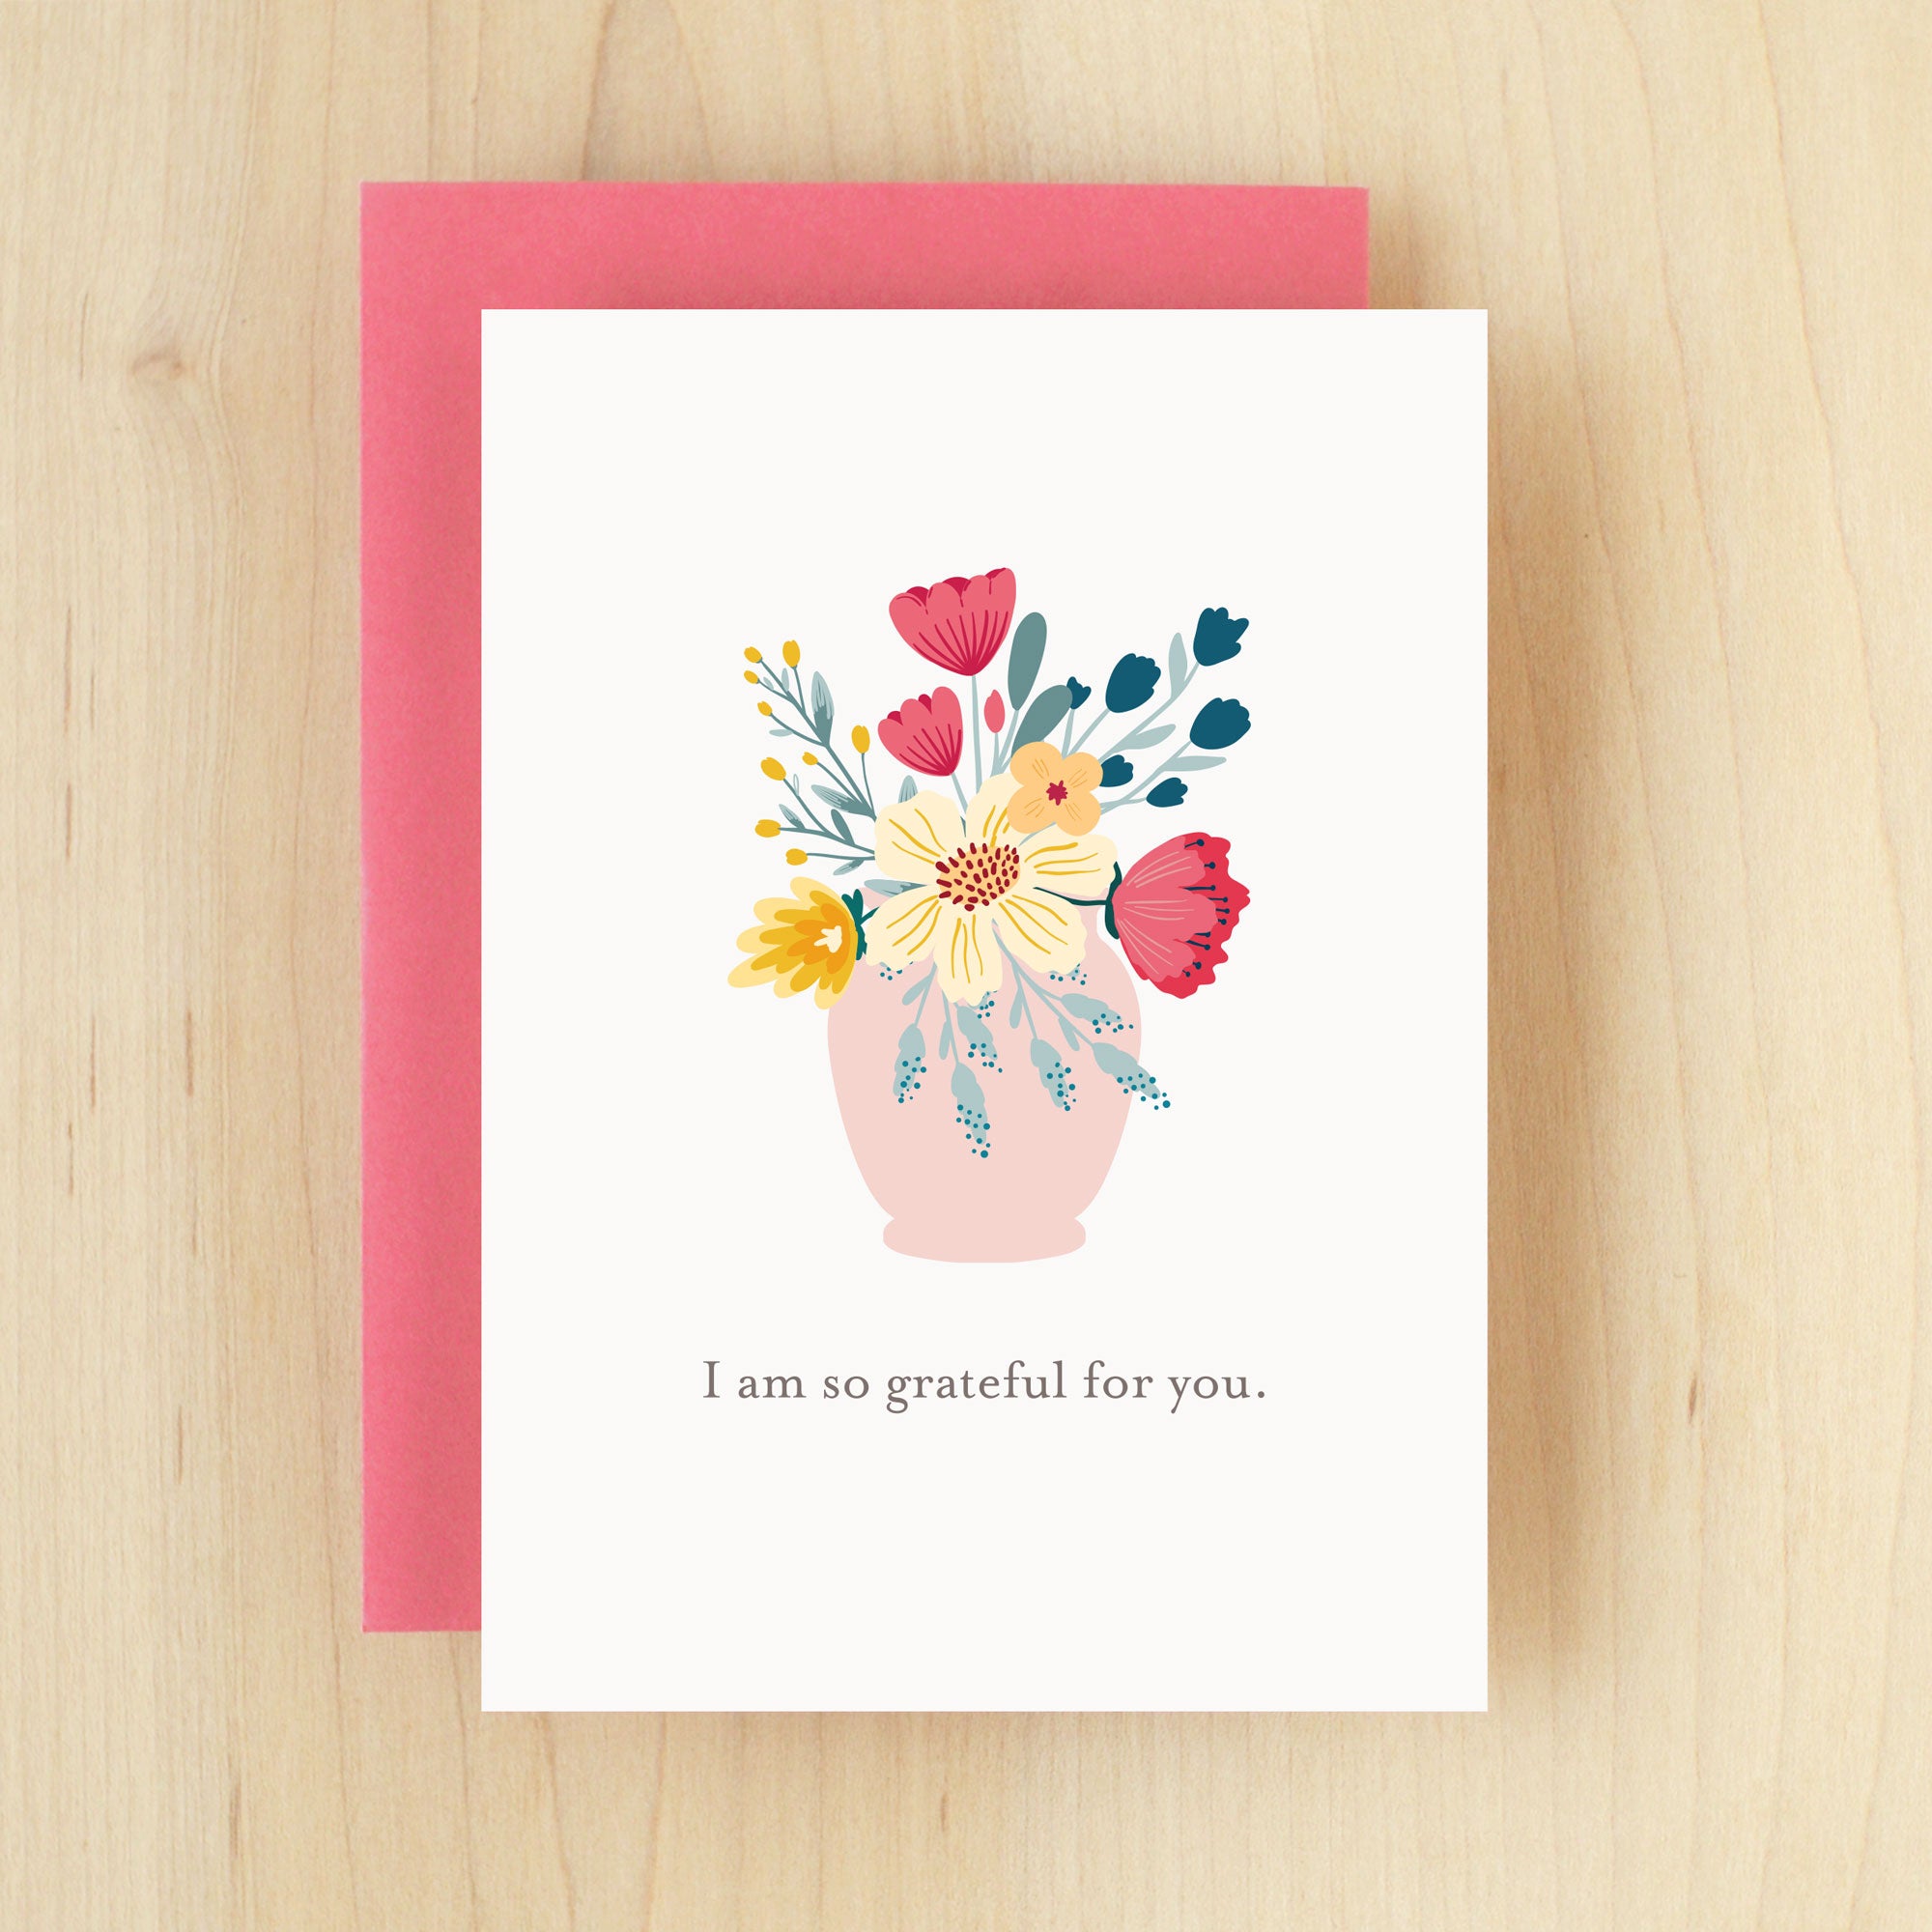 "I am so grateful for you" Grateful Greeting Card #279